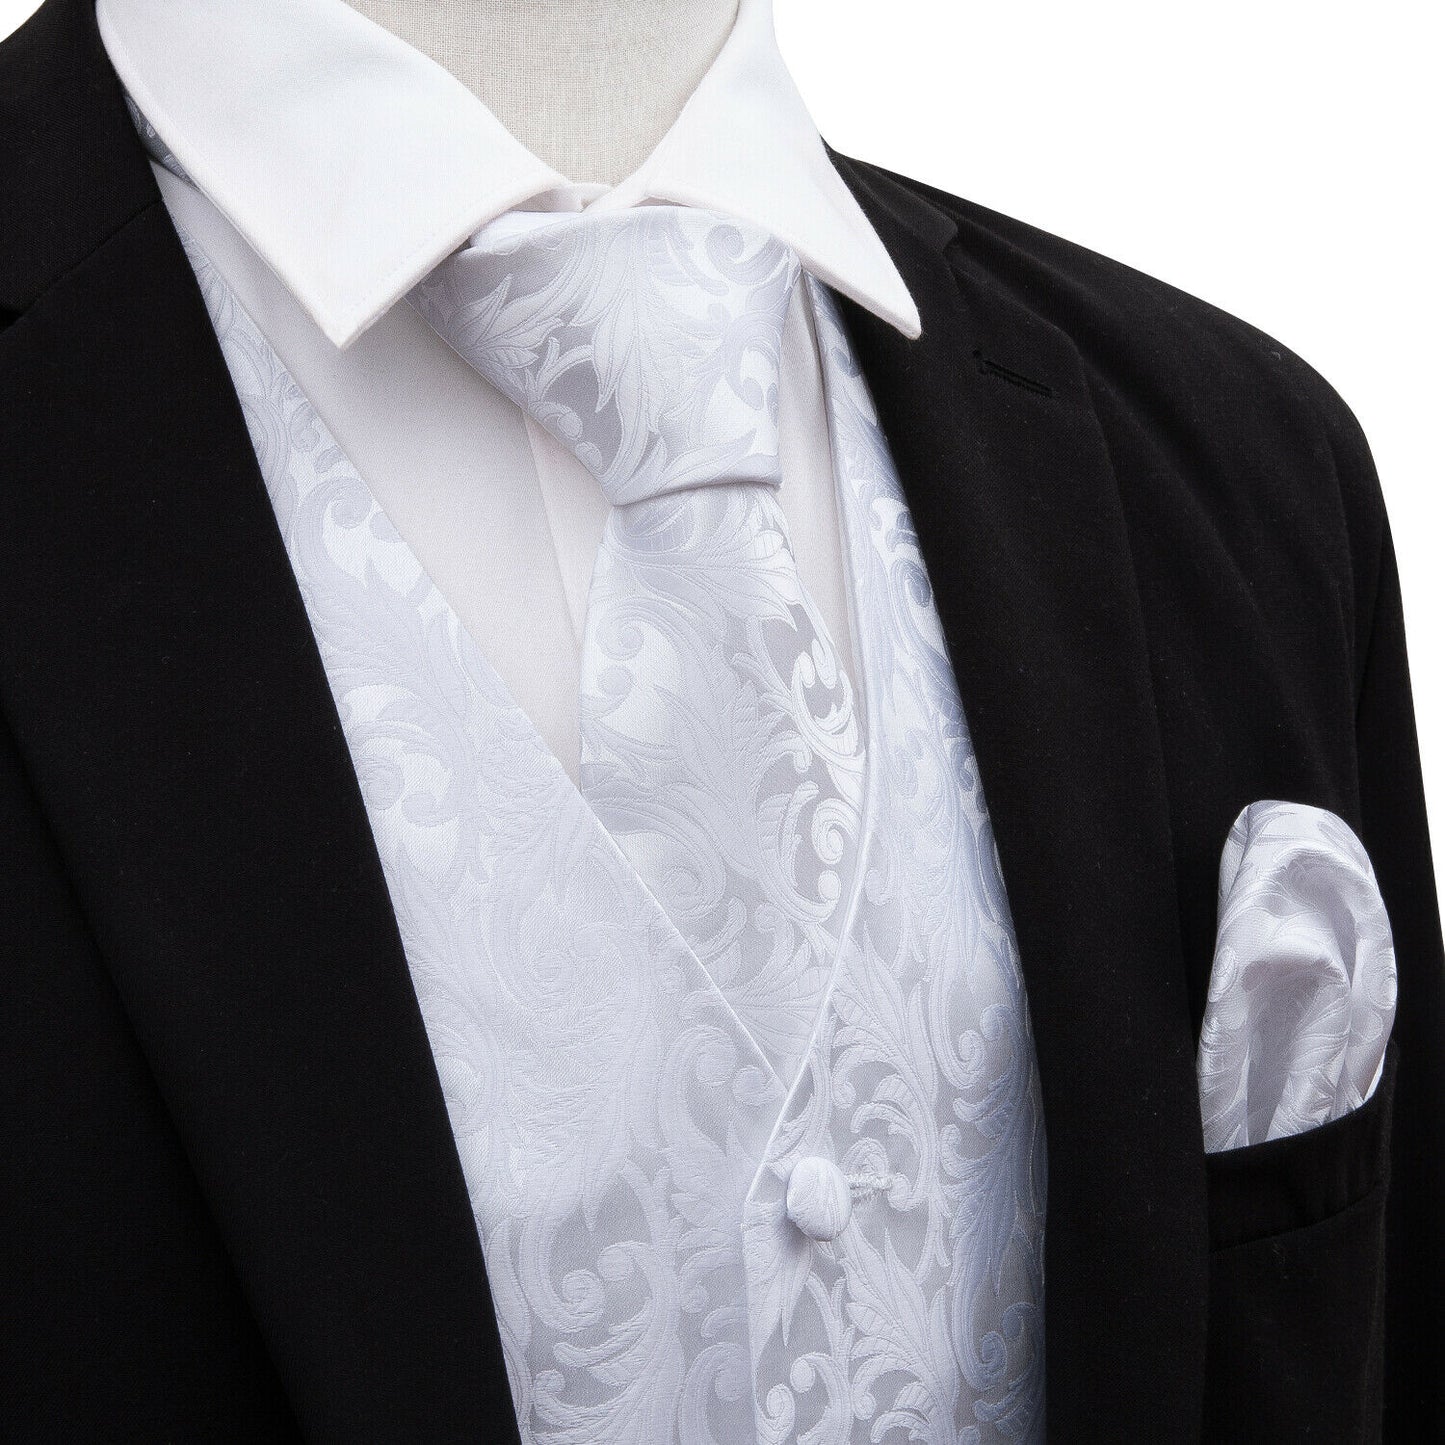 Designer Floral Waistcoat Silky Novelty Vest Snow Palace